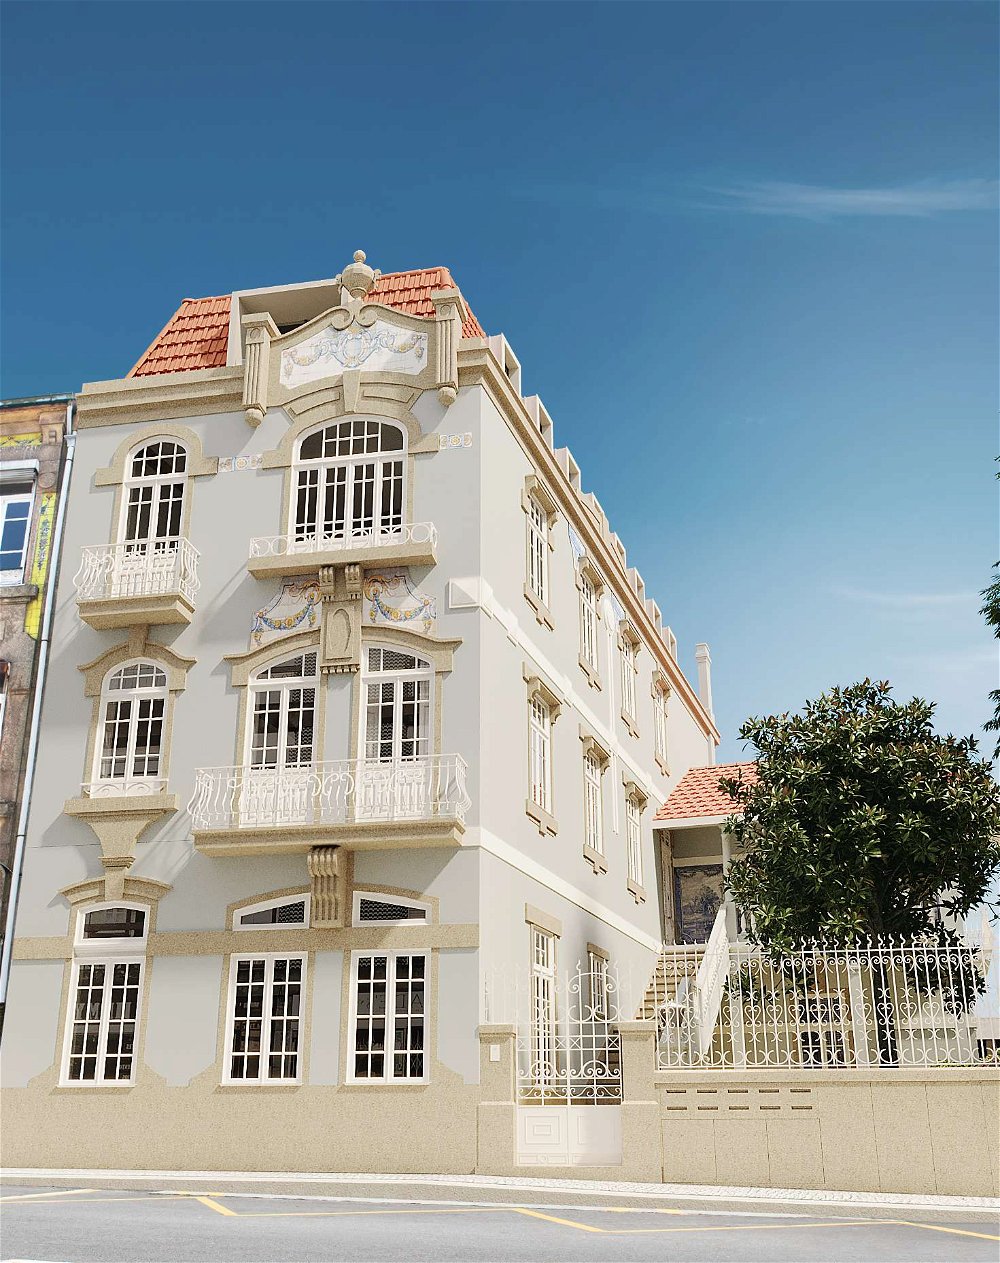 3 bedroom apartment with balcony and parking in Cedofeita, Porto 1423769728